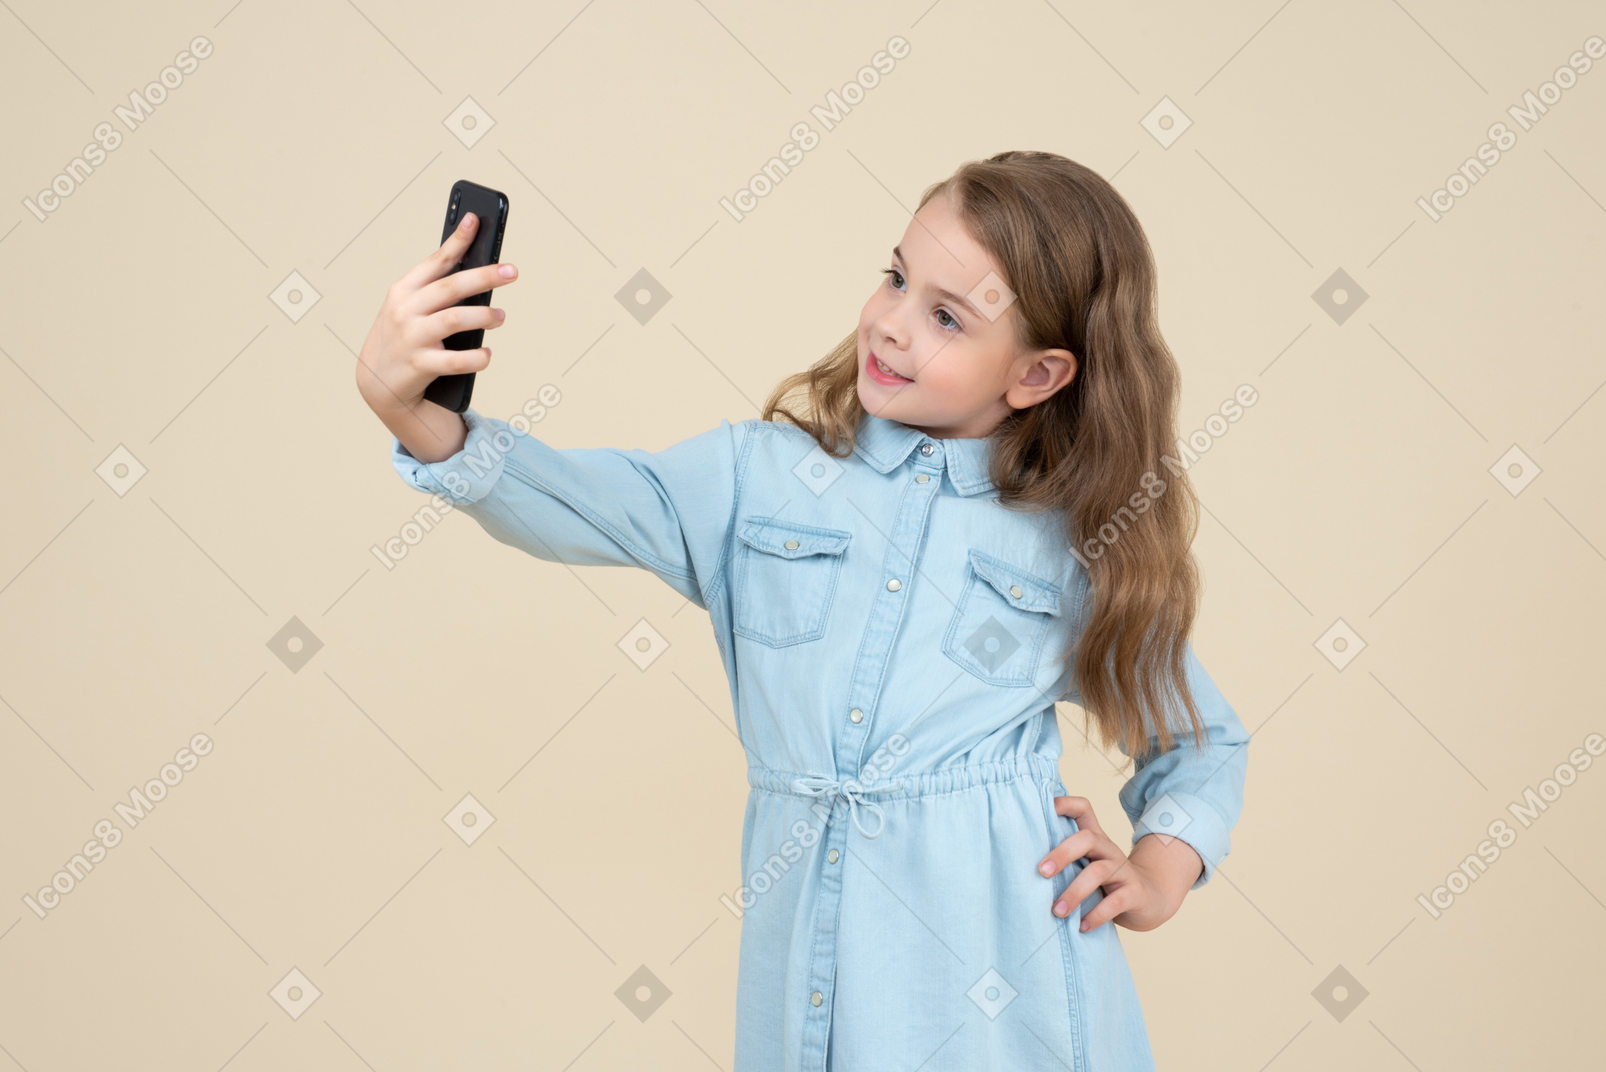 Cute little girl making a selfie